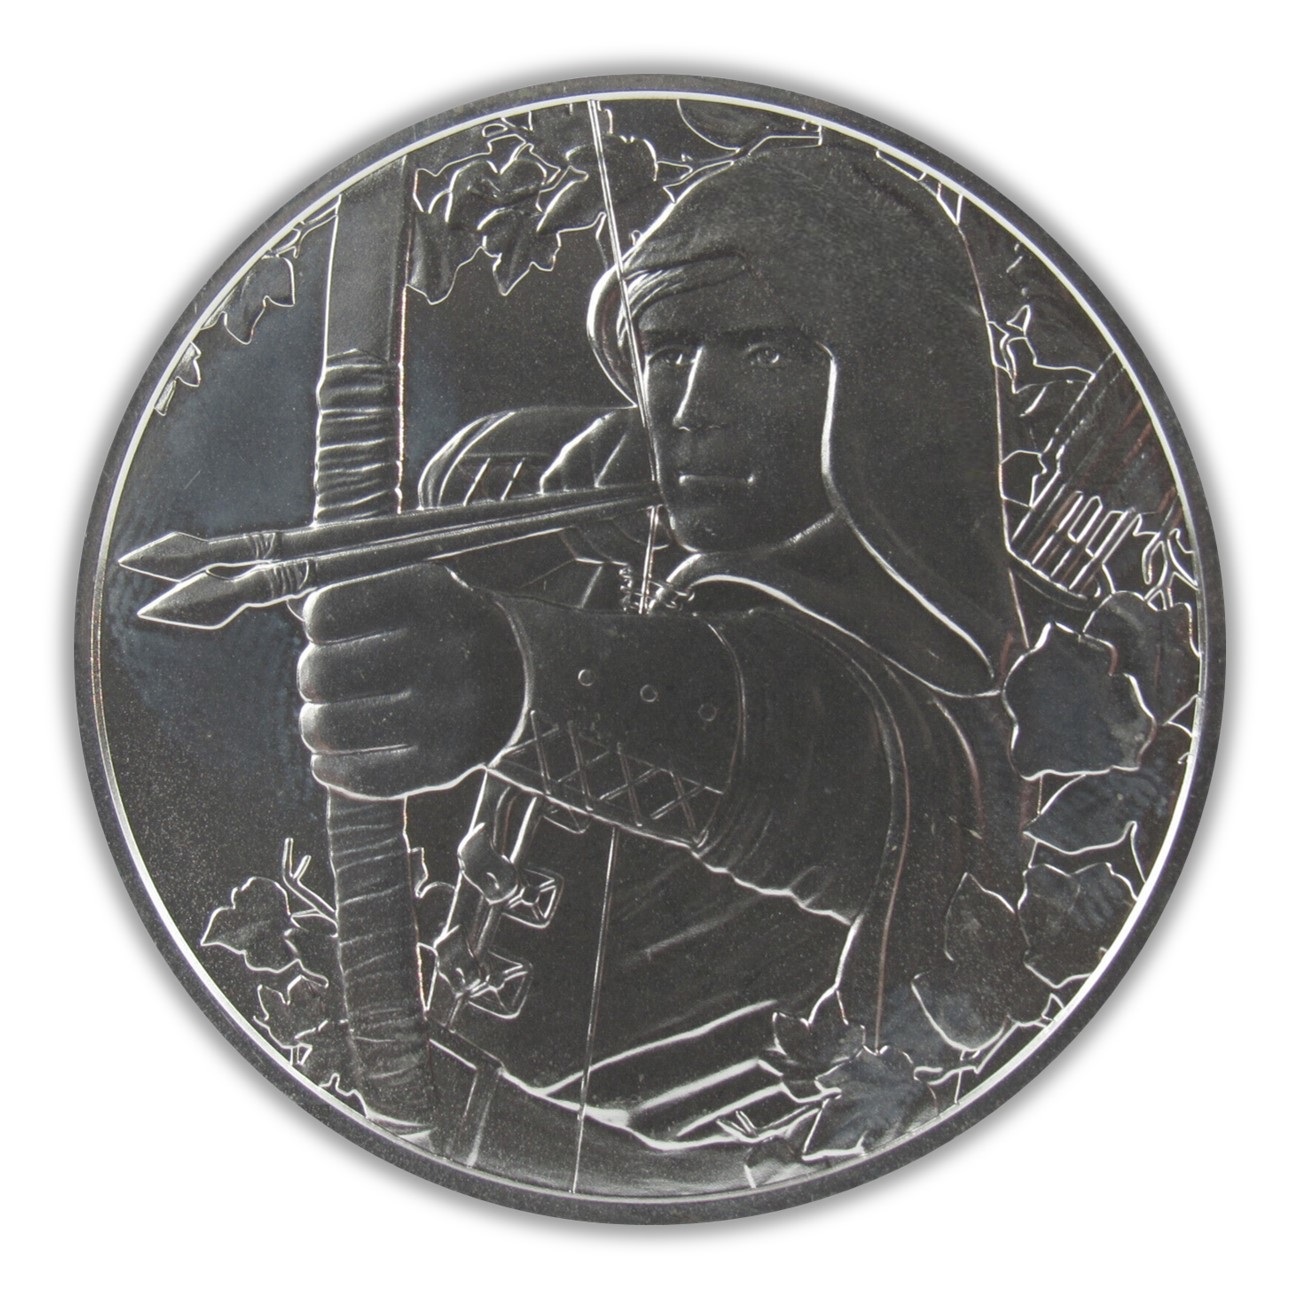 Austrian Mint Robin Hood 1 oz Silver Coin